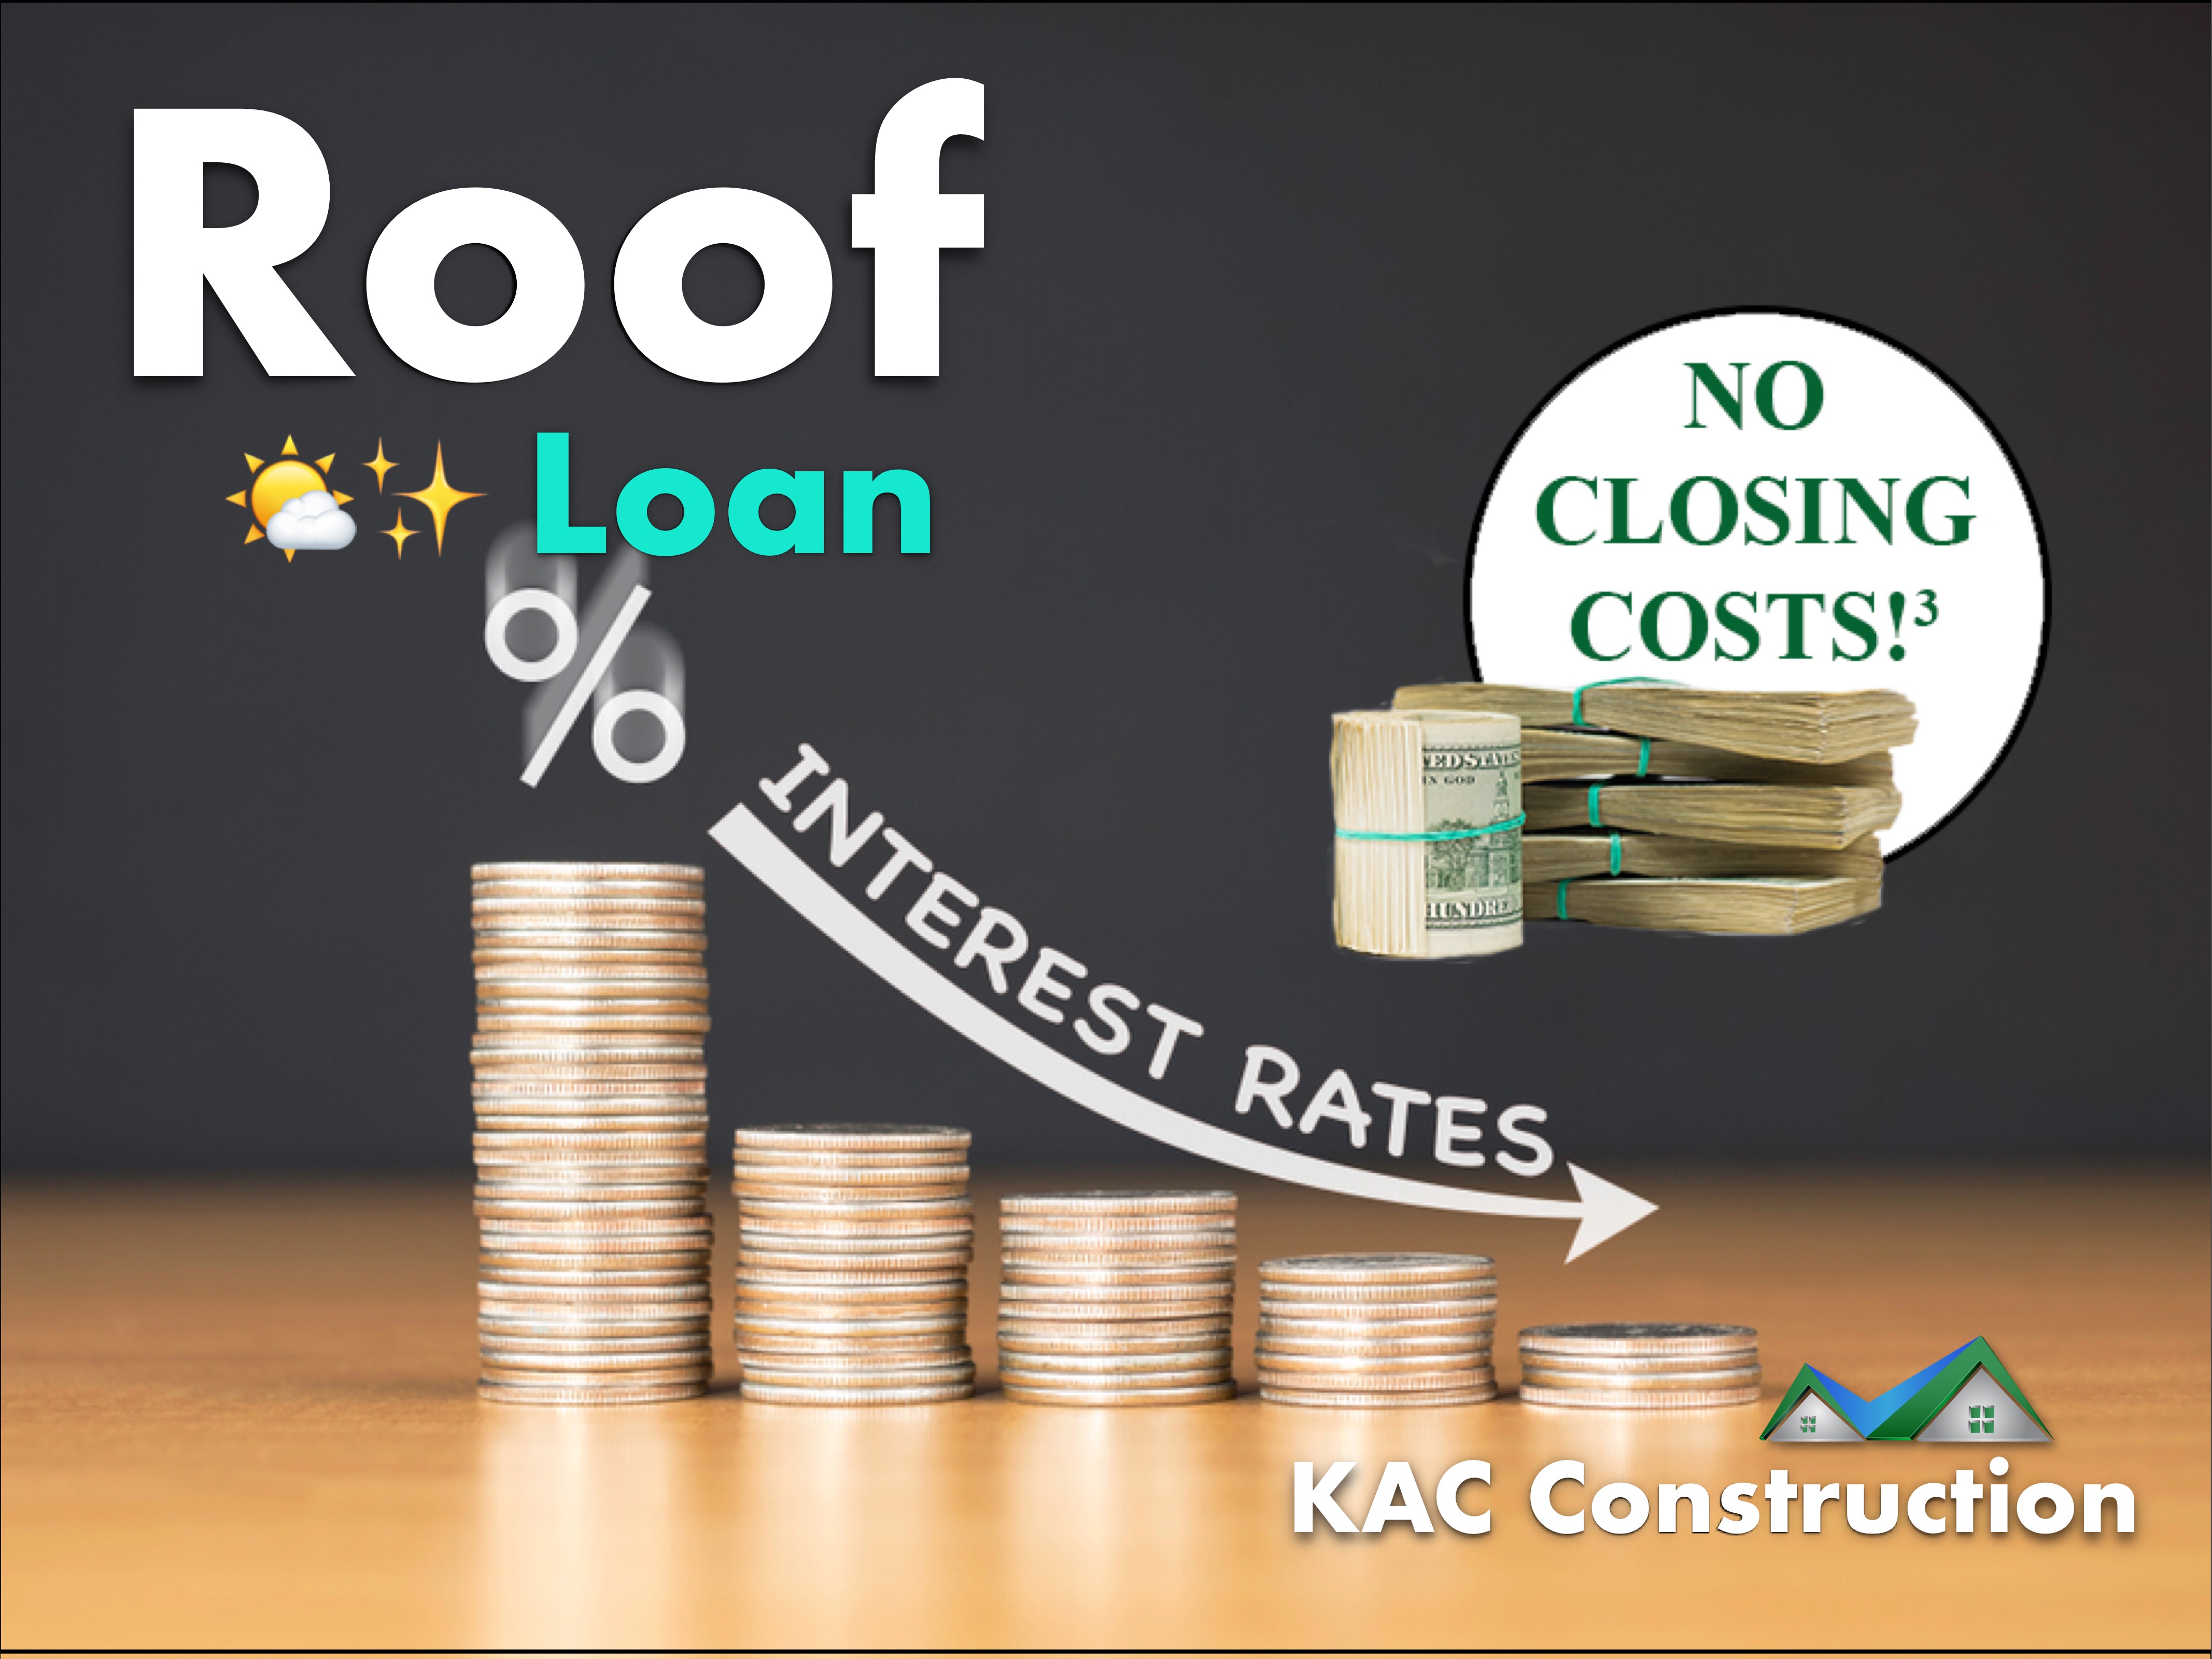 Roof loan, roof loans ri, best roof loans, best roof loans ri, roofing loans ri, best roofing loan ri, roof repair Loan ri, roof repairs Loan i, roe Loan i